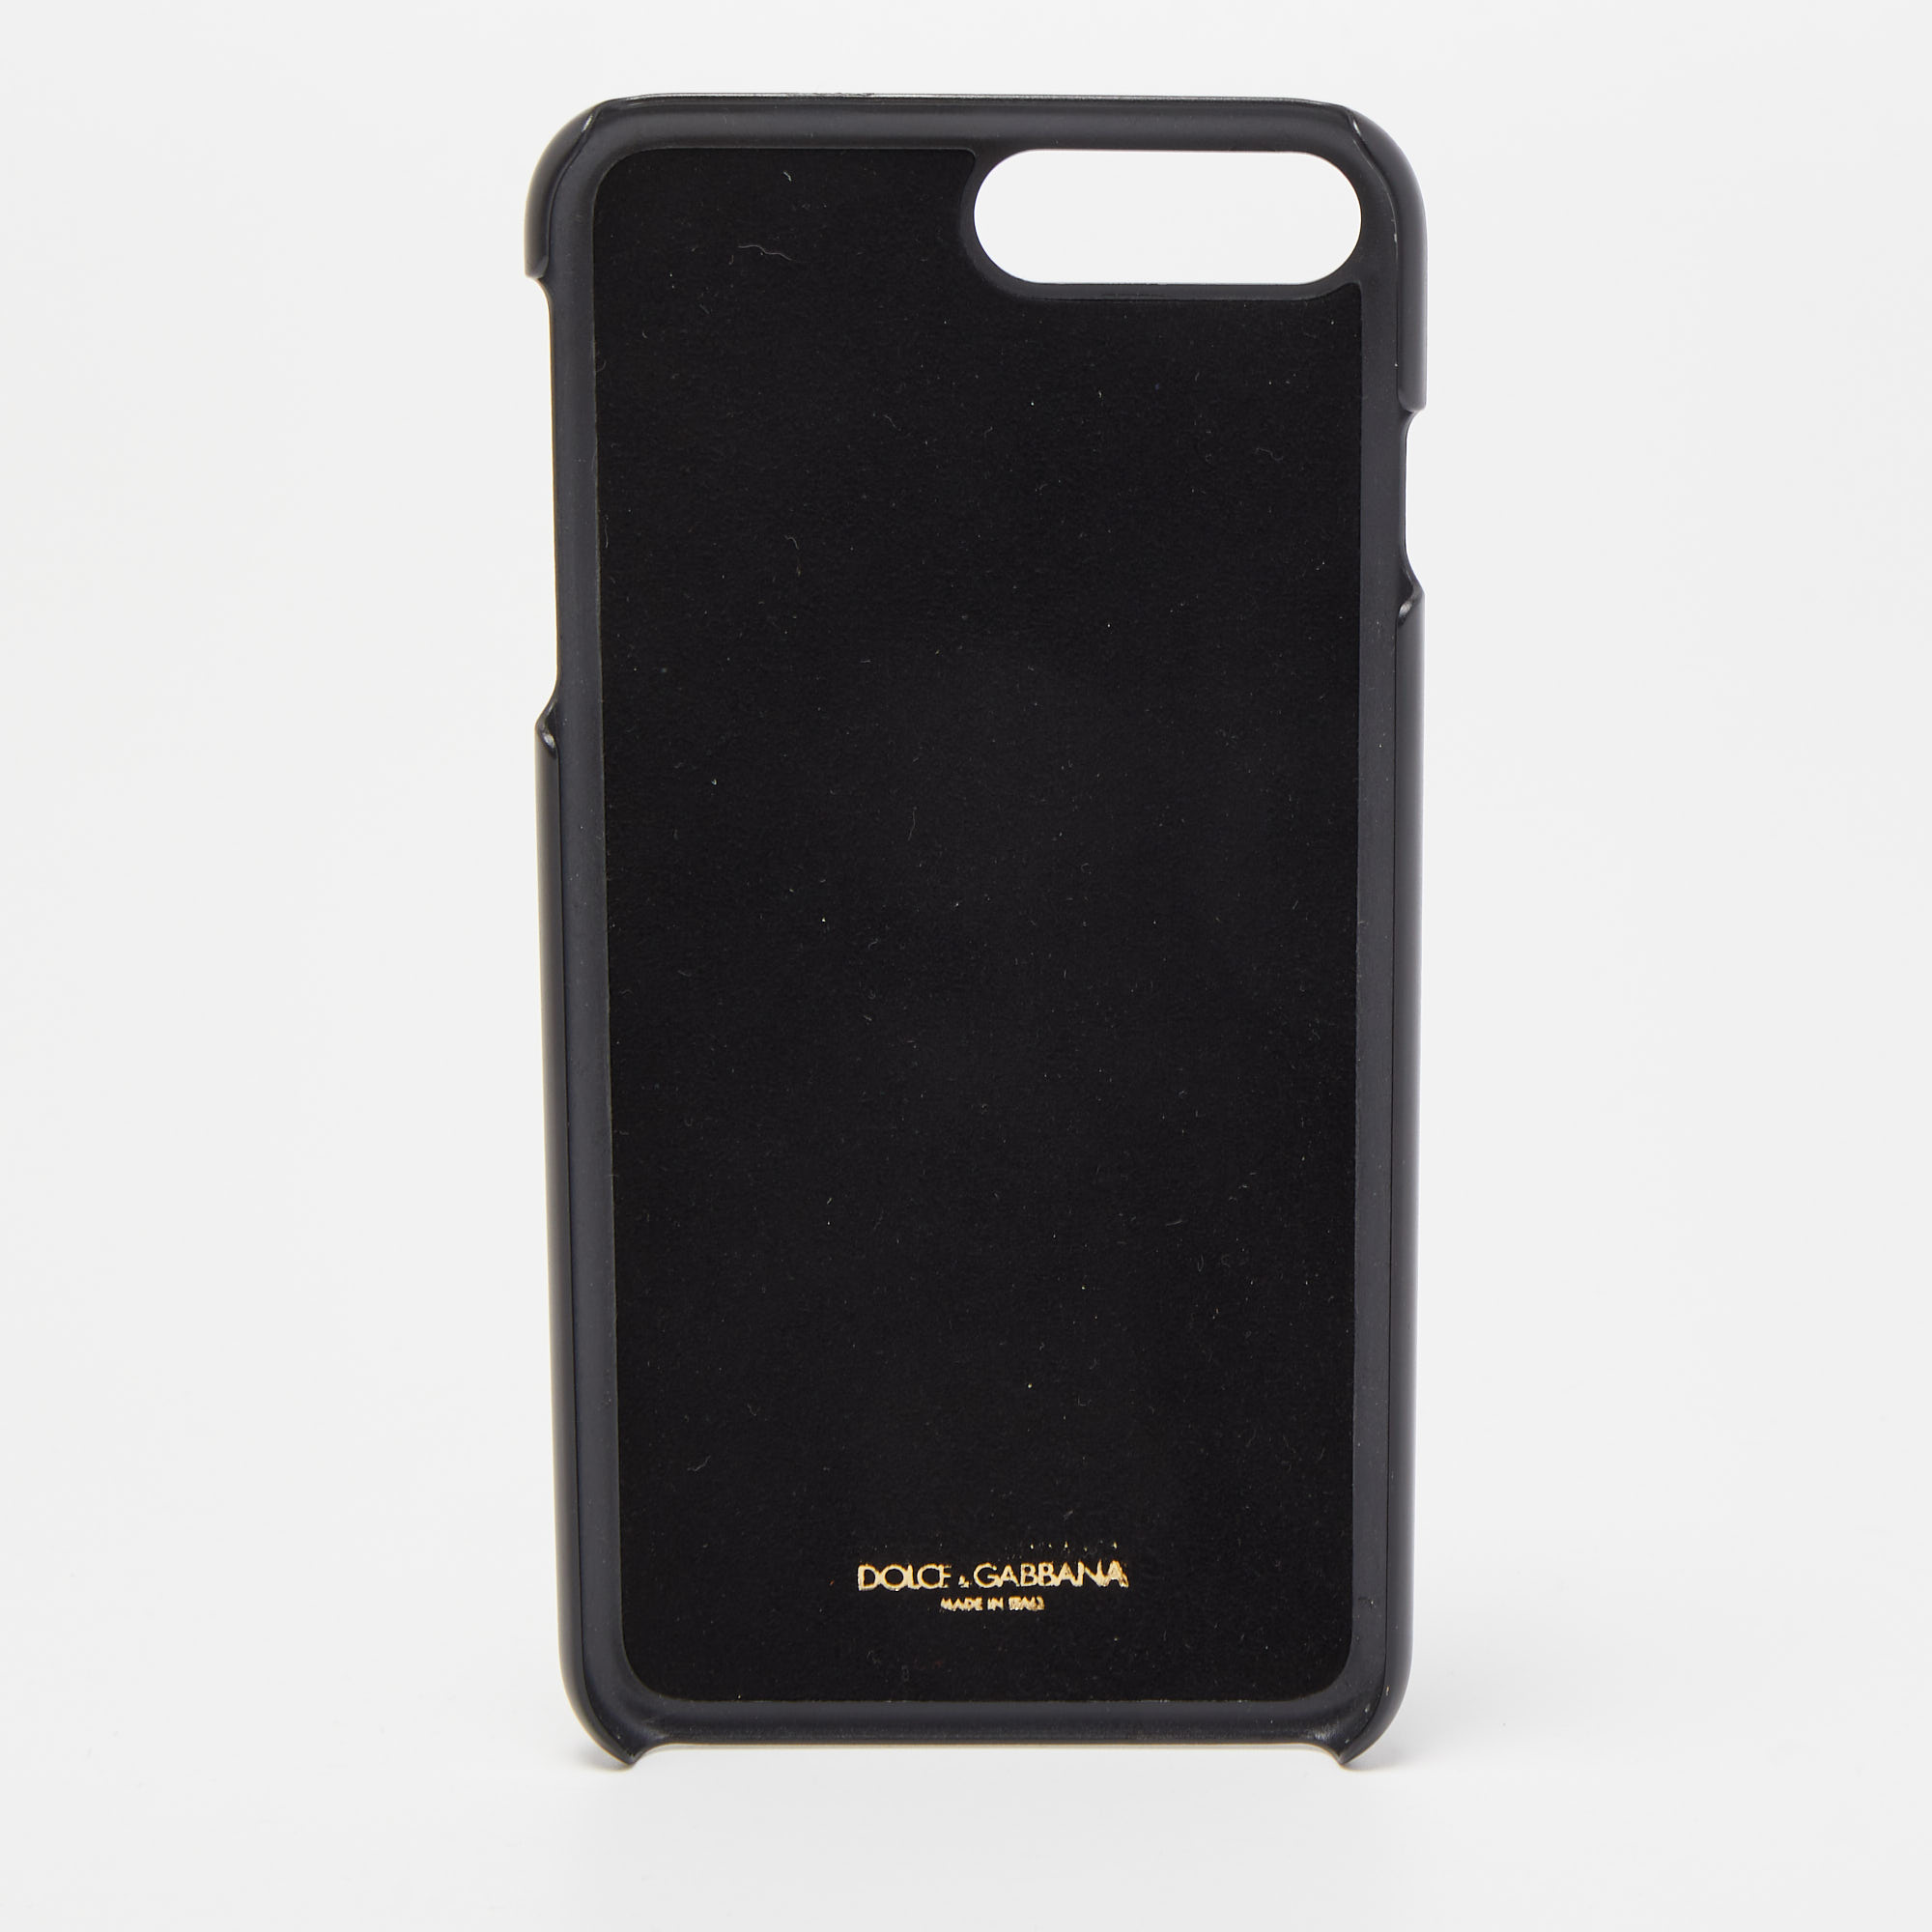 Dolce & Gabbana Black Polkadot Crystal Embellished Leather IPhone 7 Plus Case